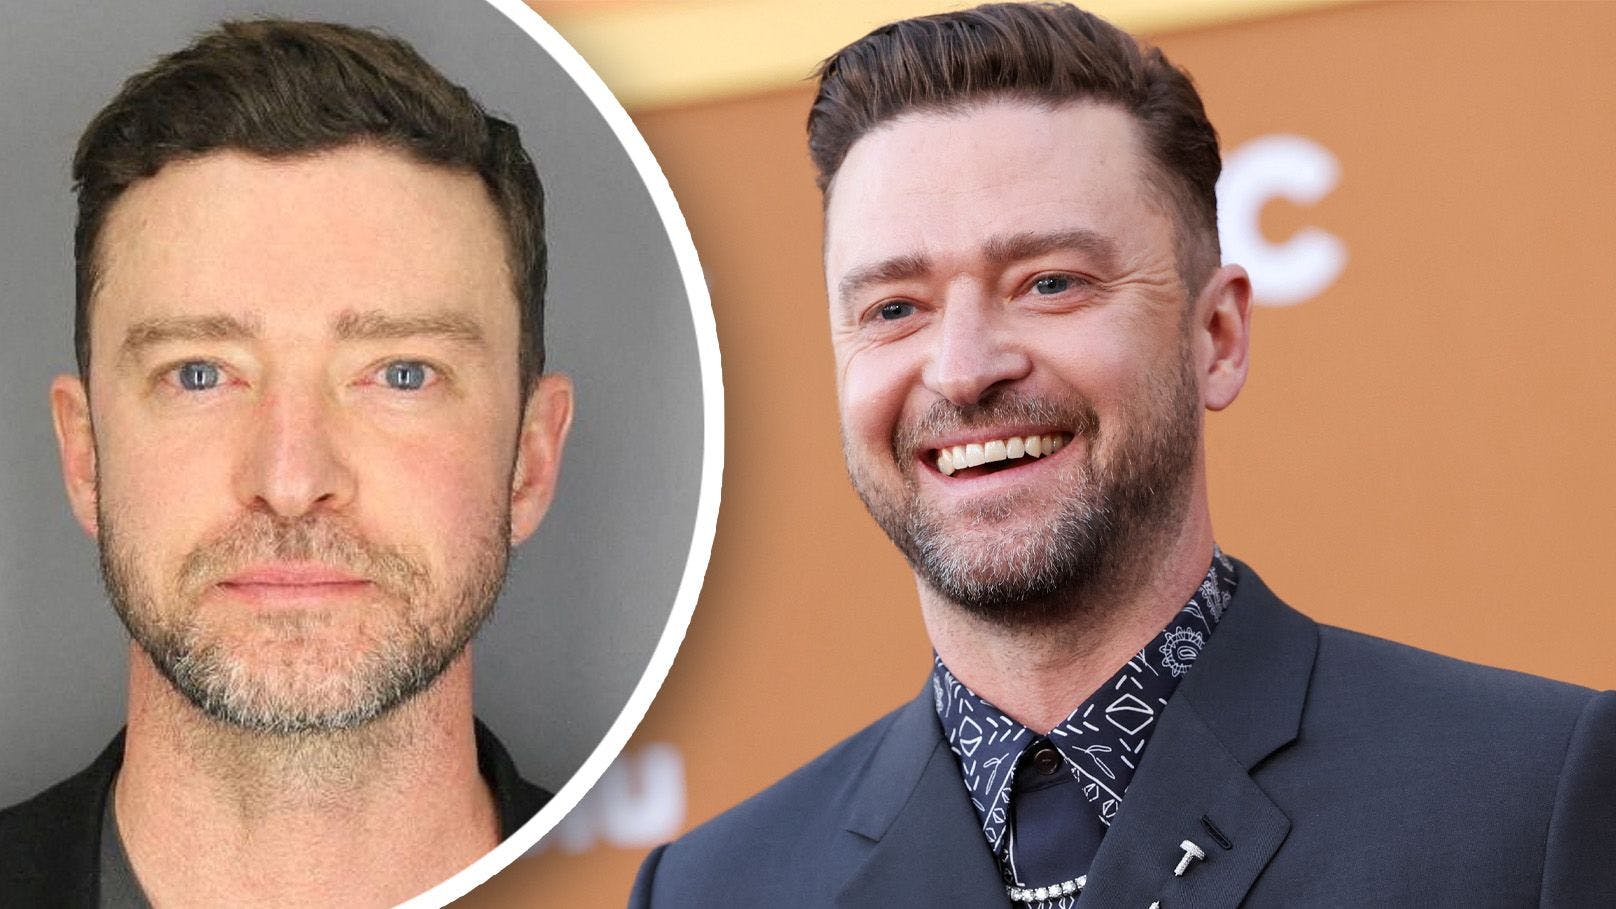 "Breites Lächeln" – Timberlake reagiert auf Festnahme